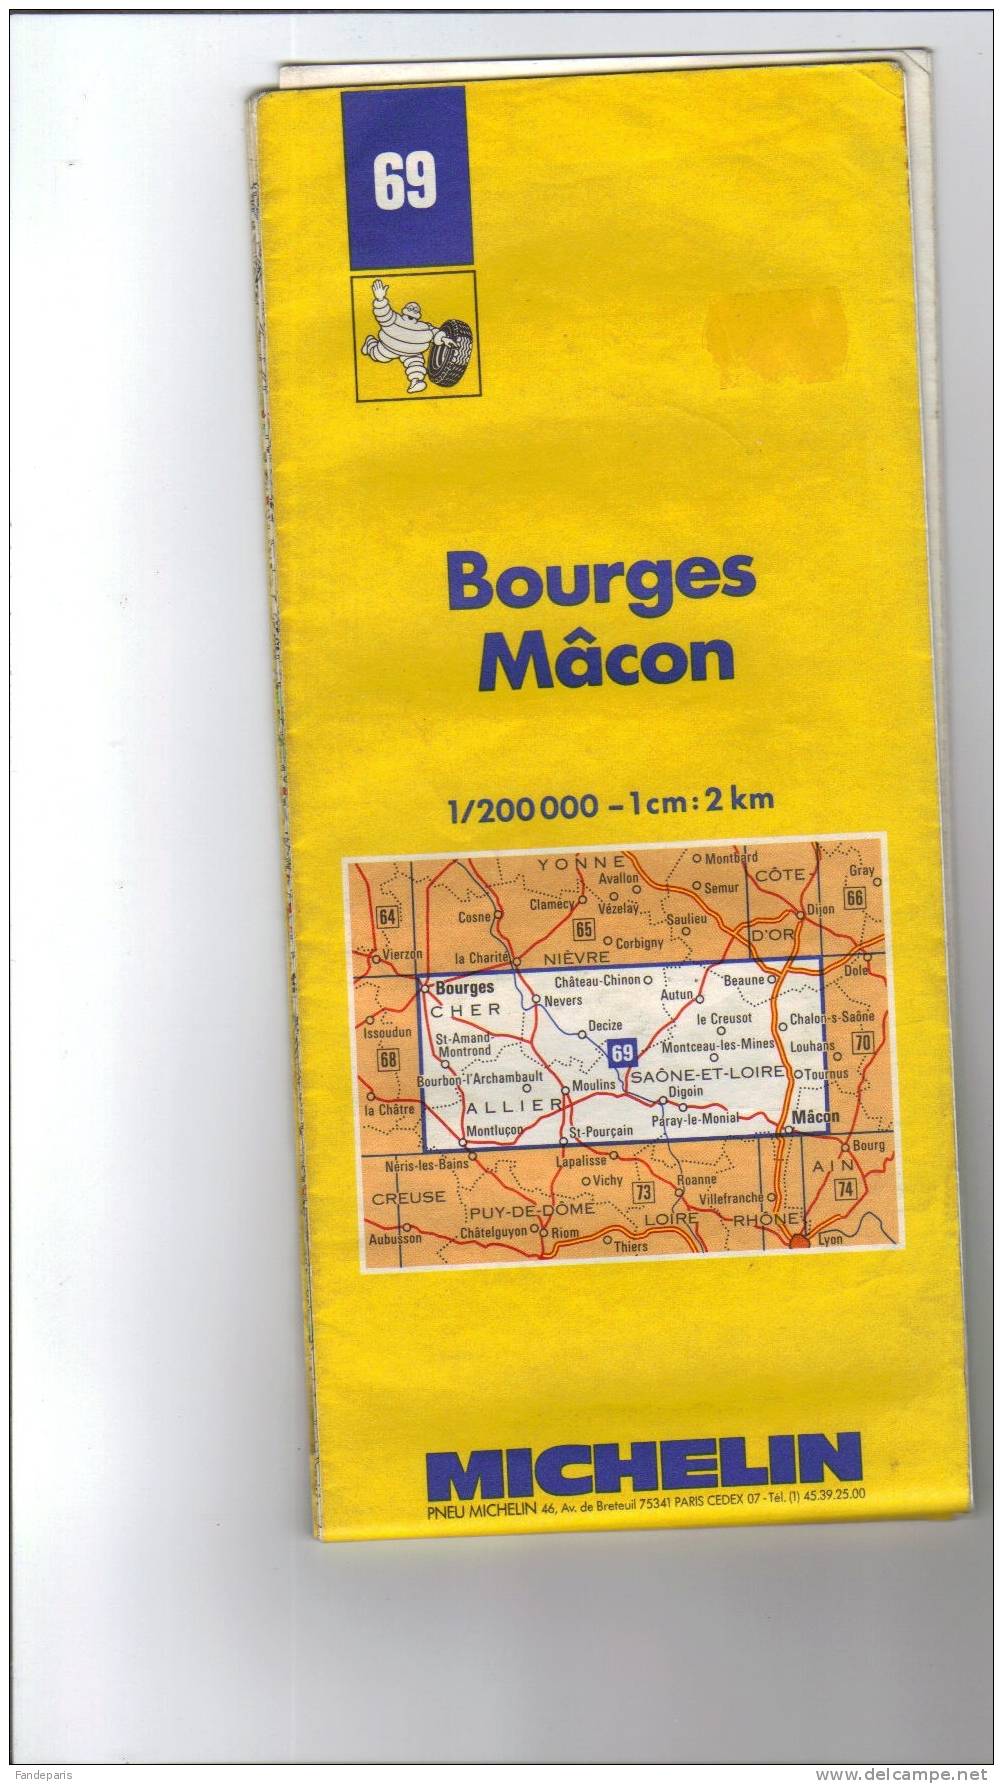 CARTES ROUTIERES  // FRANCE  //   BOURGES - MACON  / MICHELIN  / N° 69 - Wegenkaarten